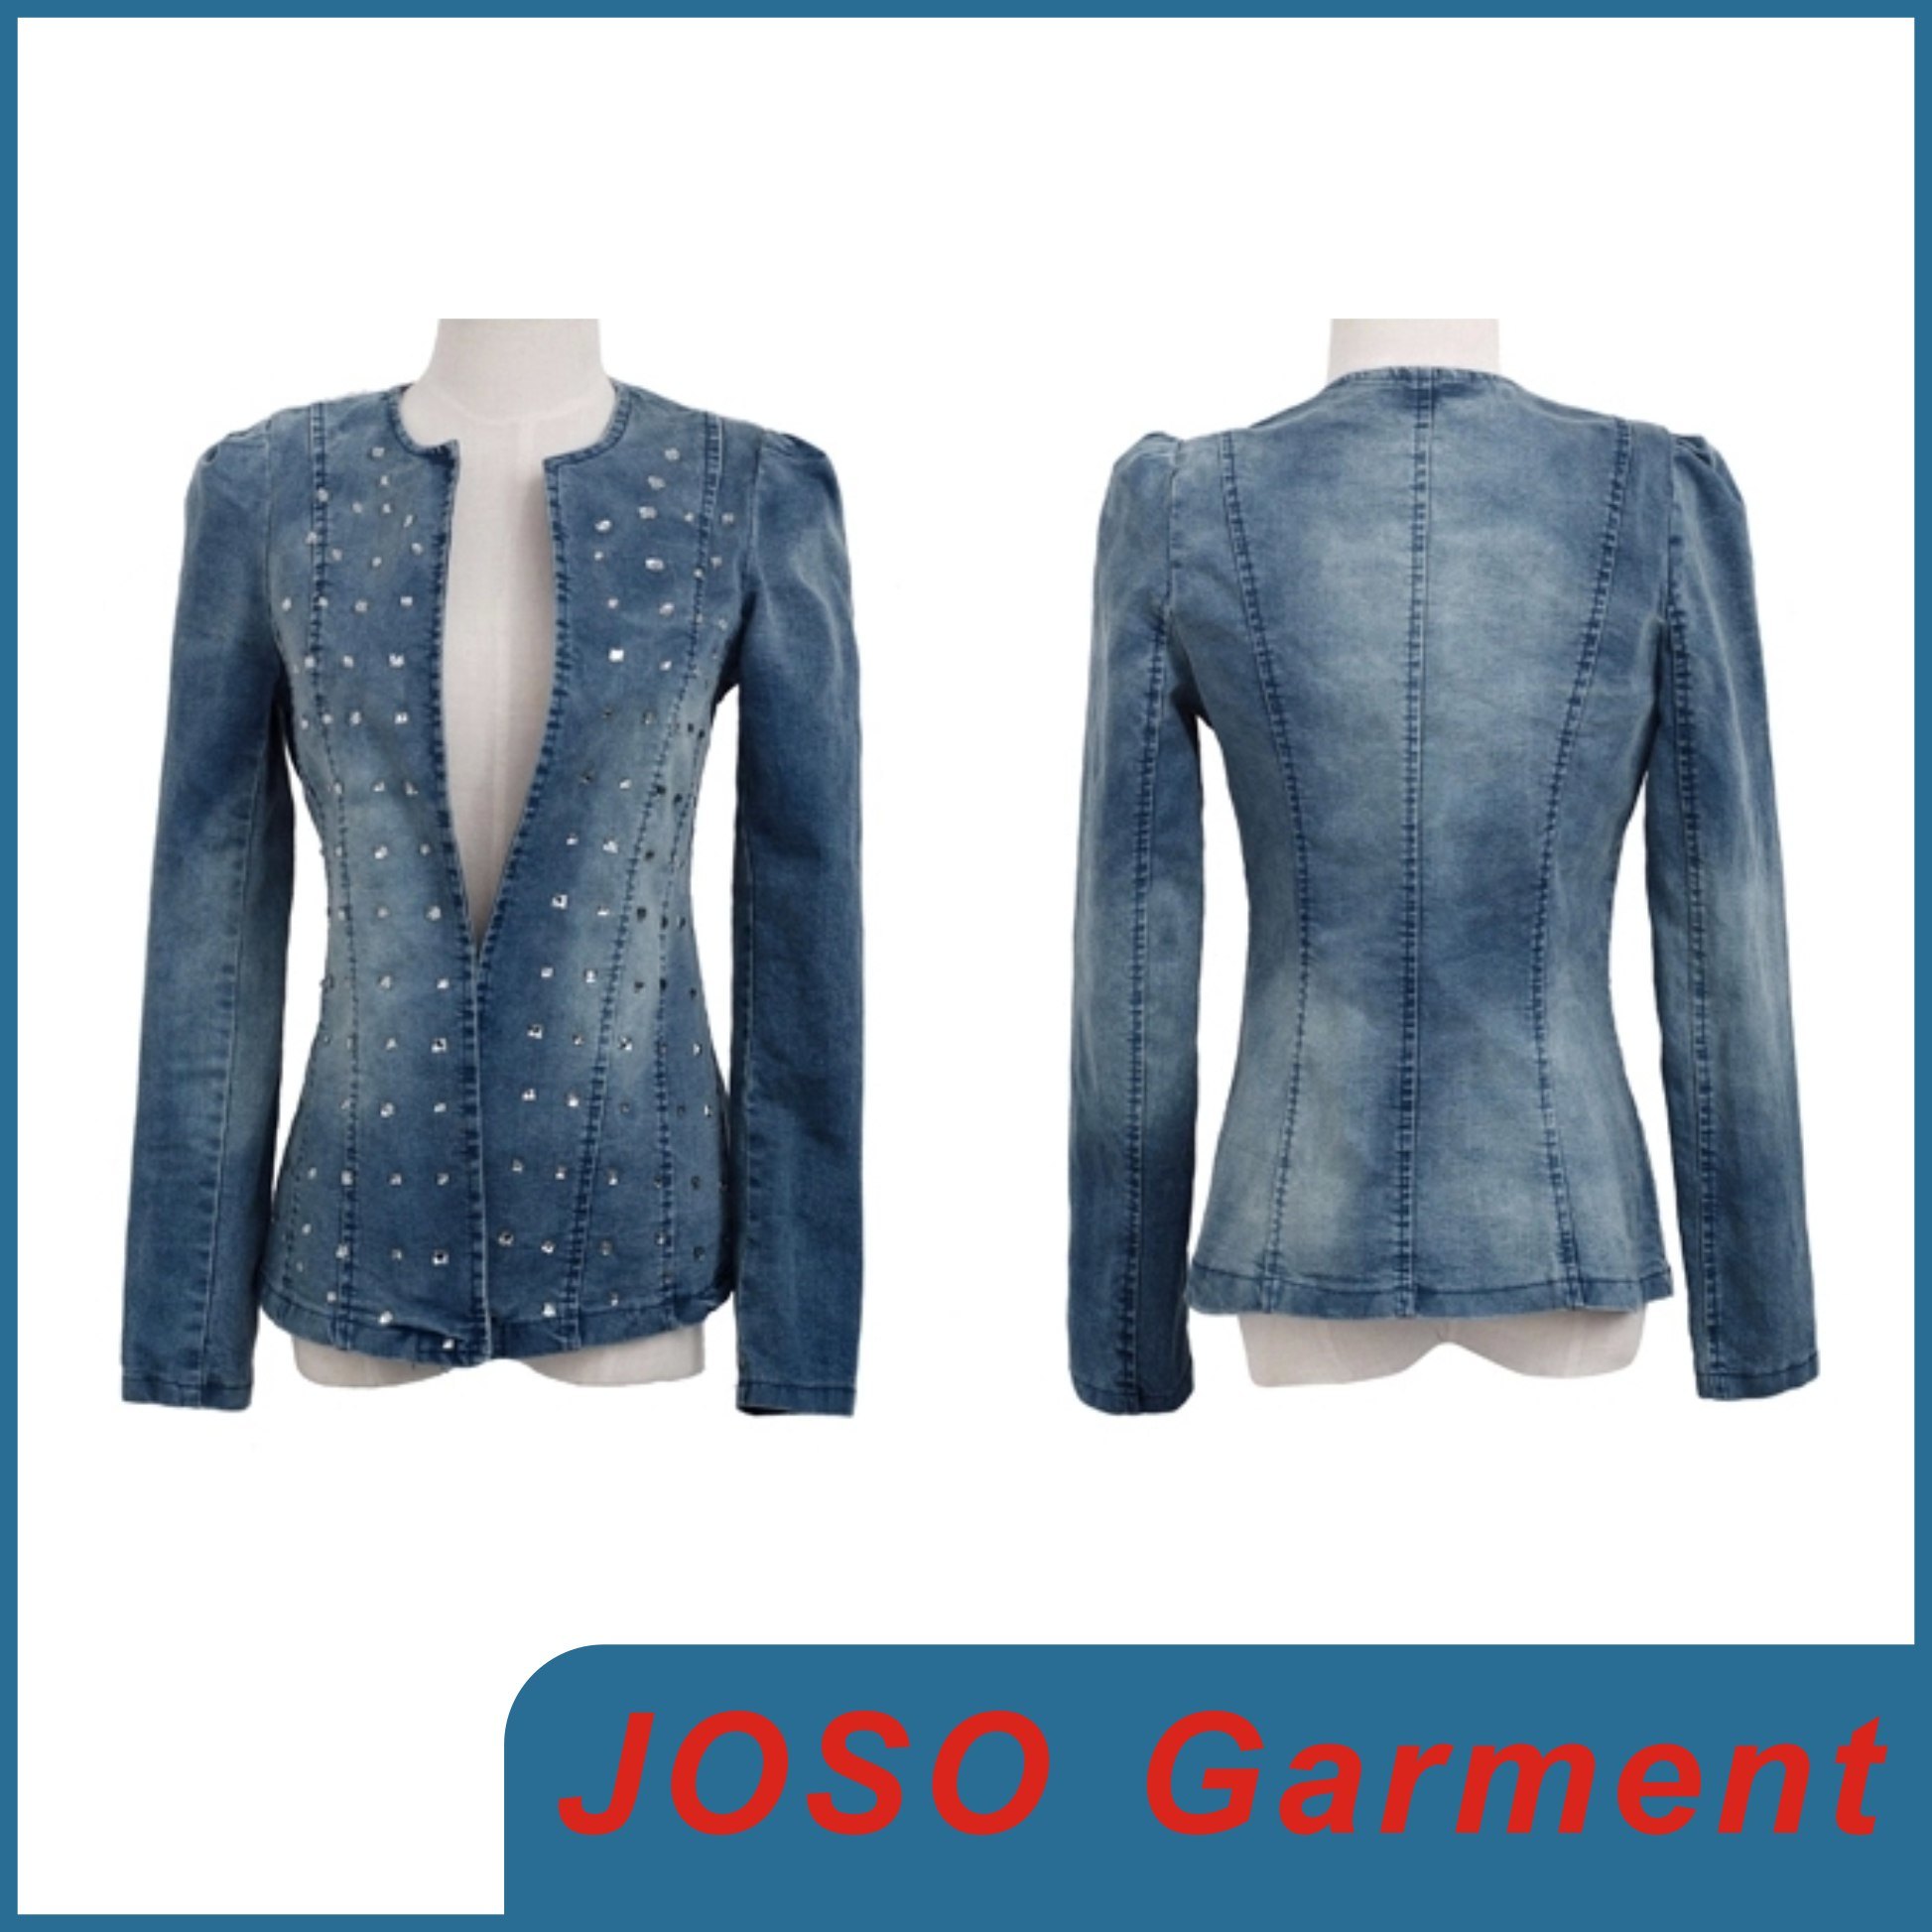 Ladies Fashion Denim Jacket (JC4013)